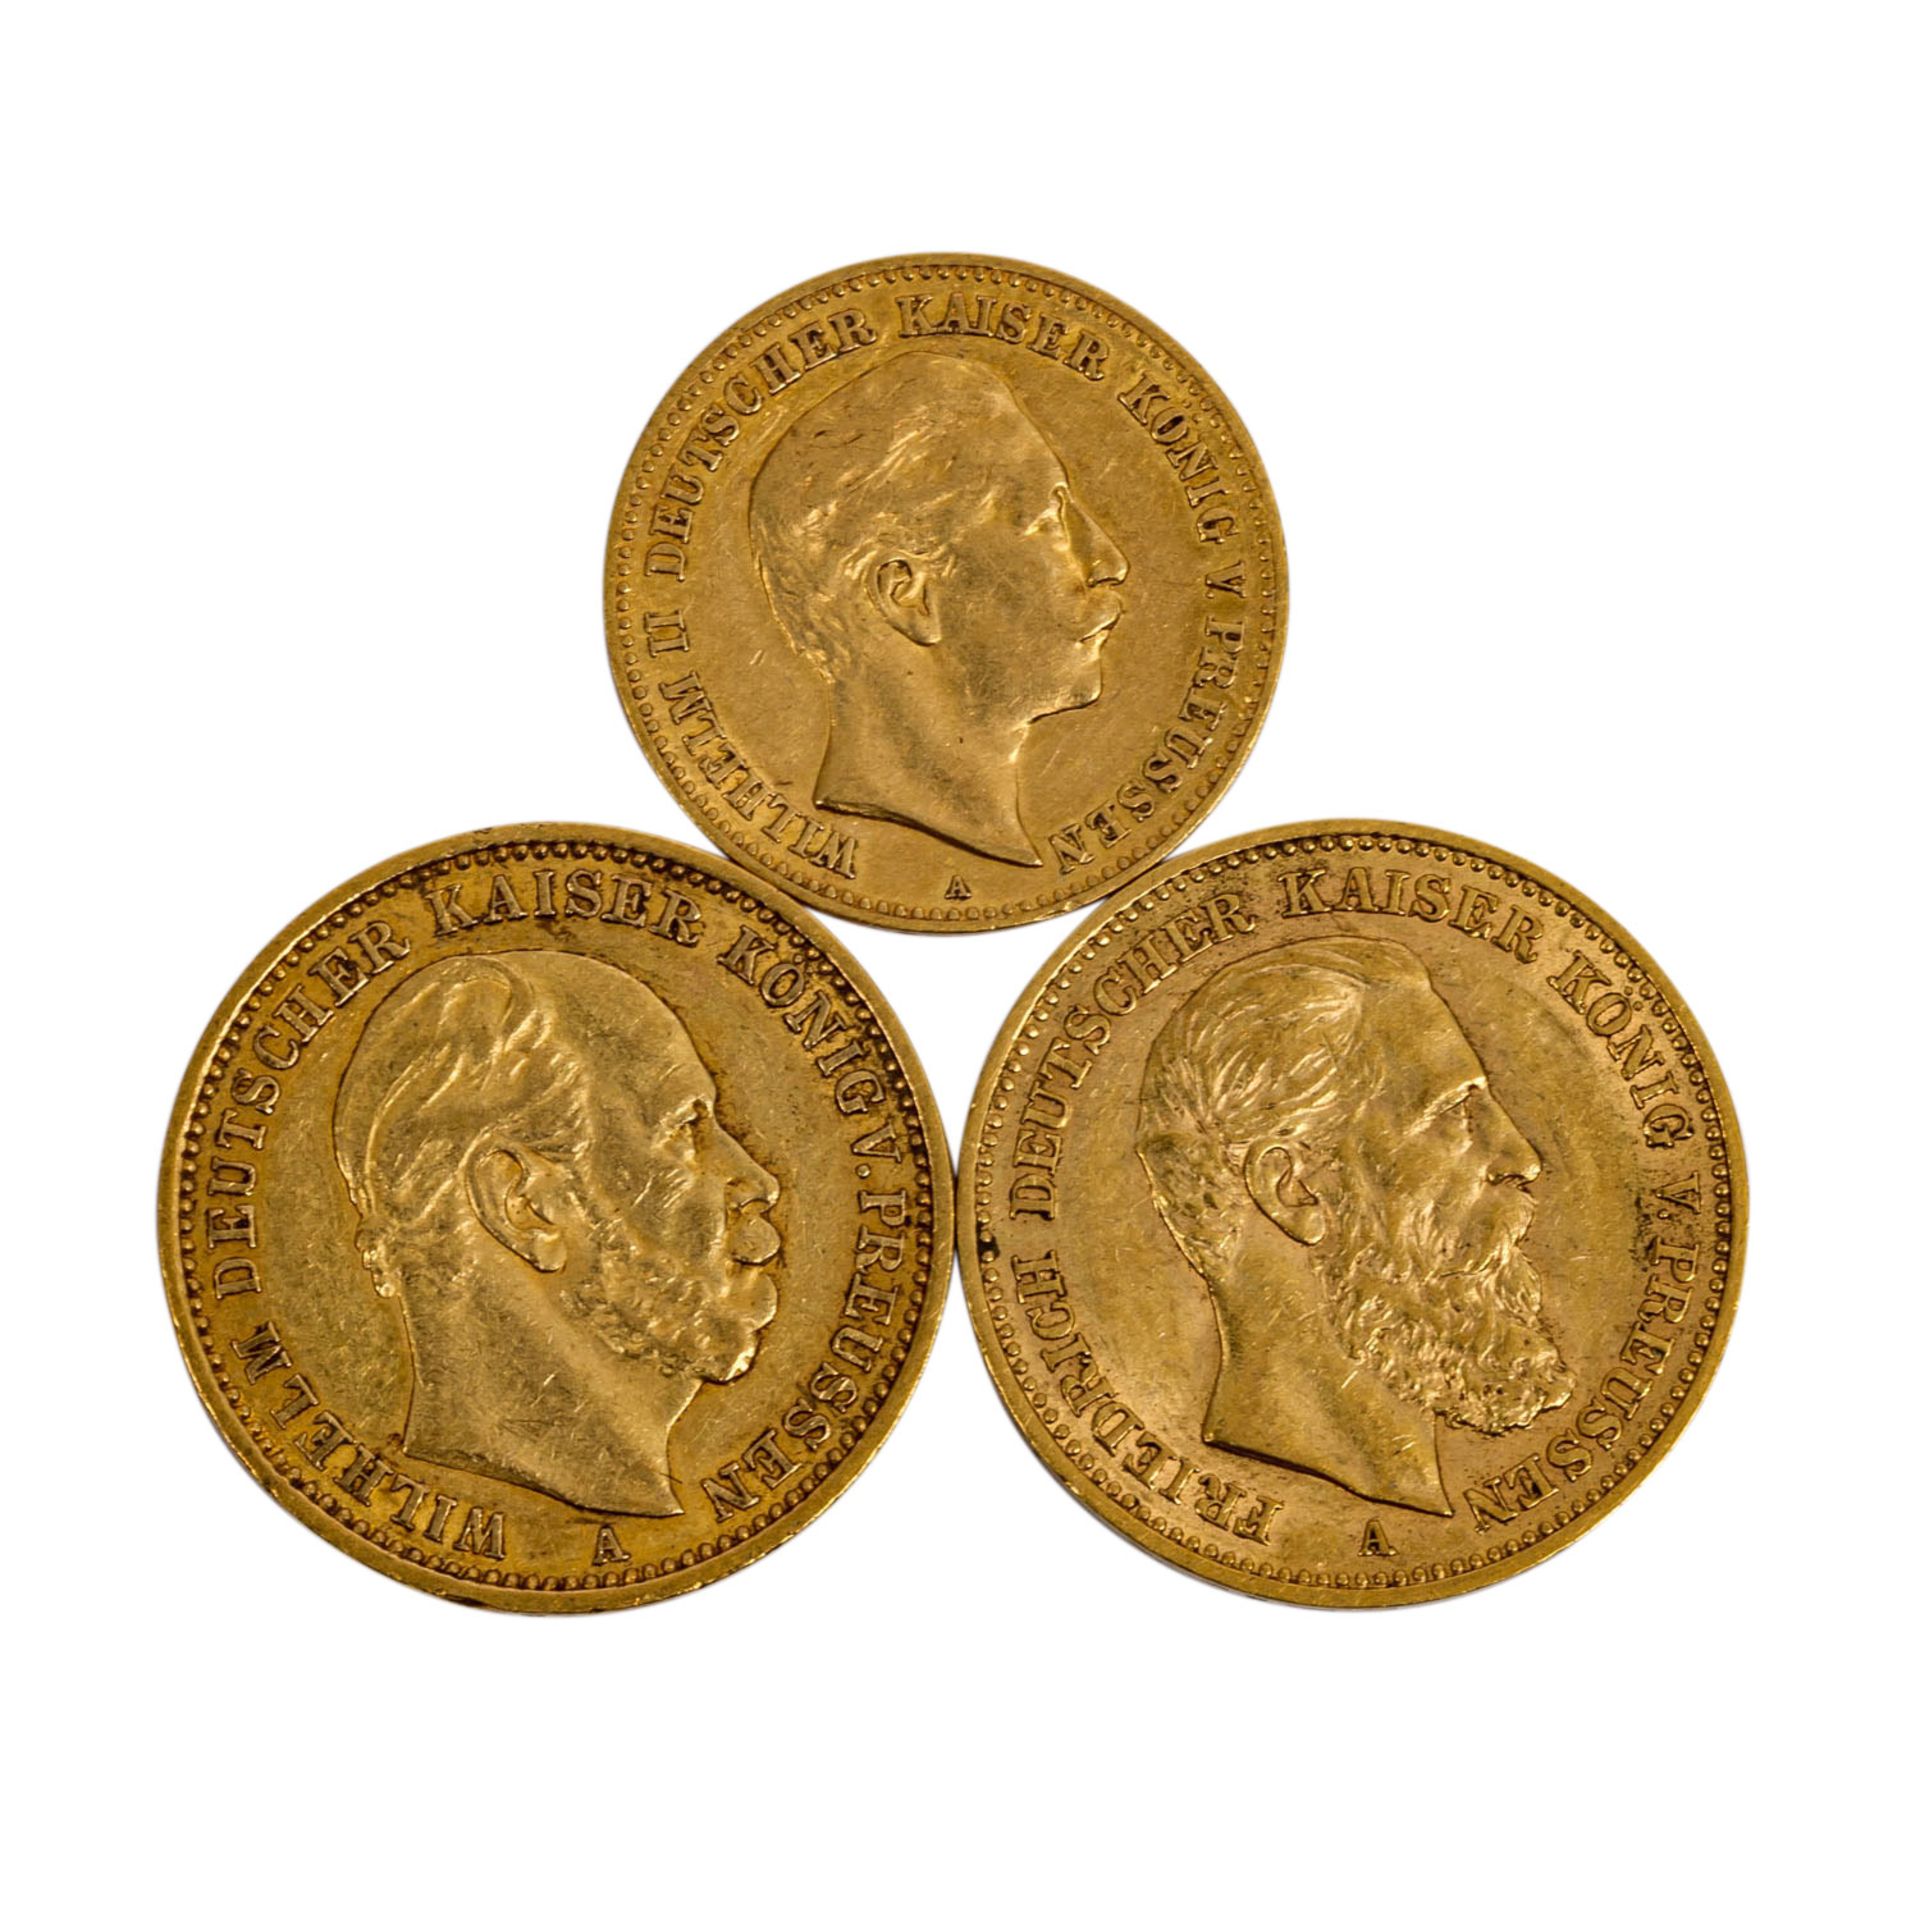 Preussen/GOLD - Konvolut 2 x 10 Mark und 1 x 10 Mark. 20 Mark 1881 A Wilhelm I., 20 Mark 1888 A